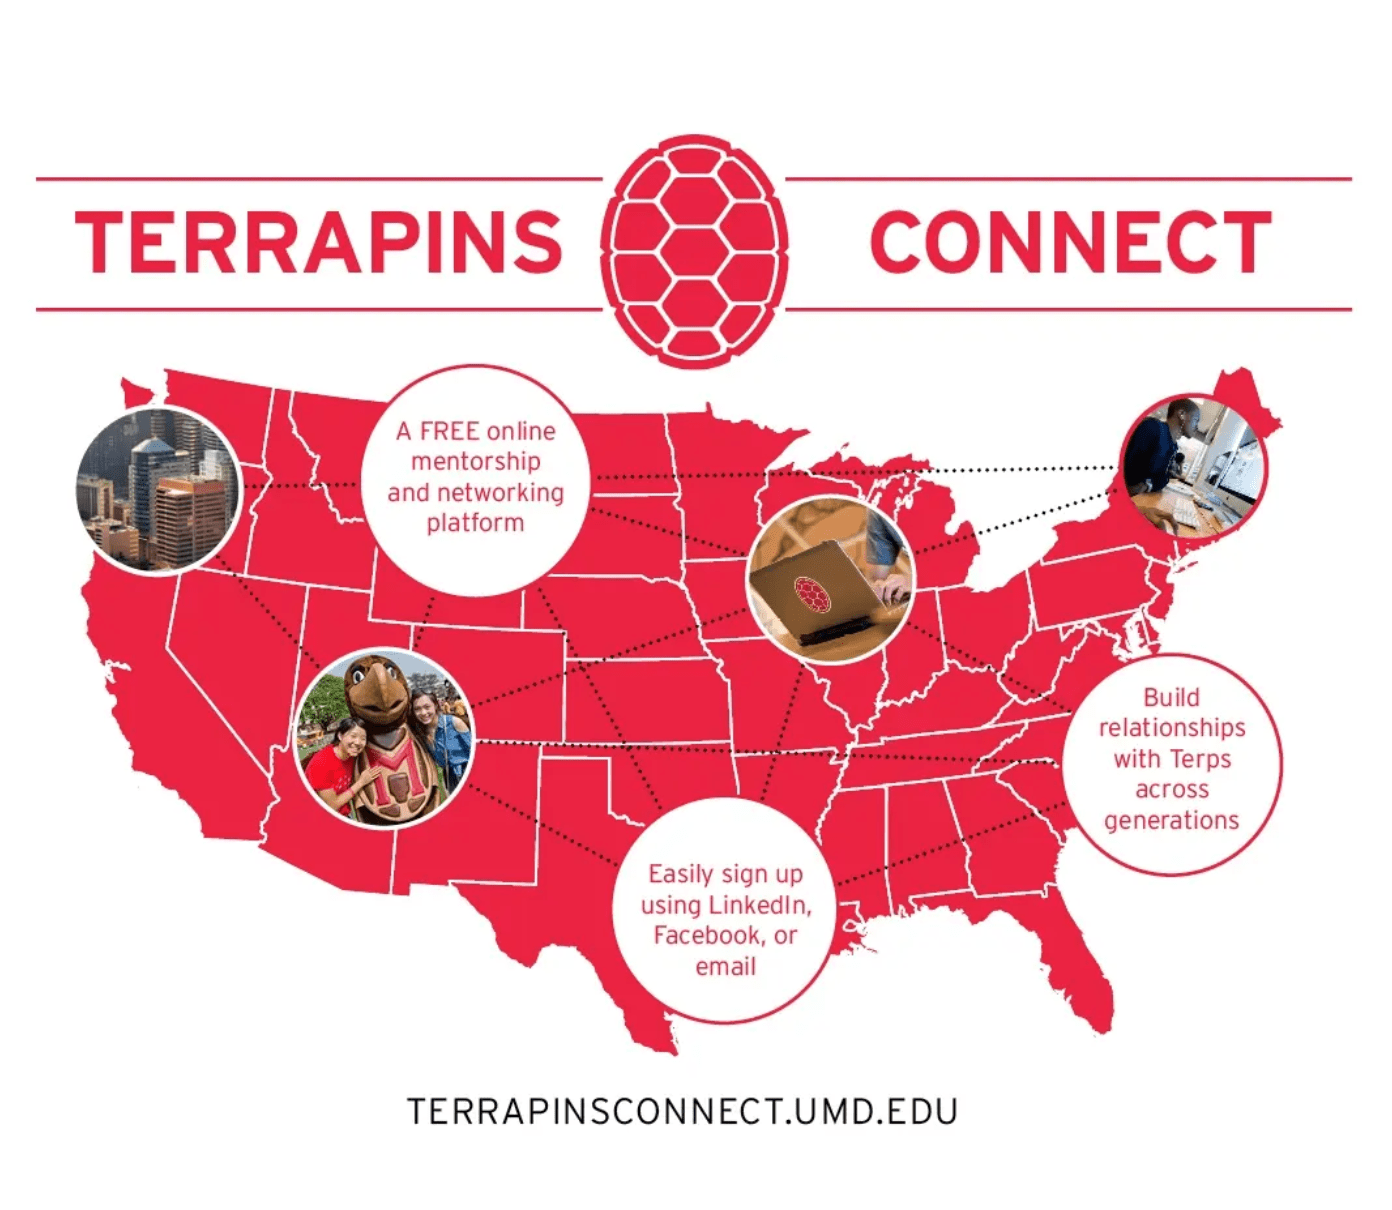 Terrapins Connect